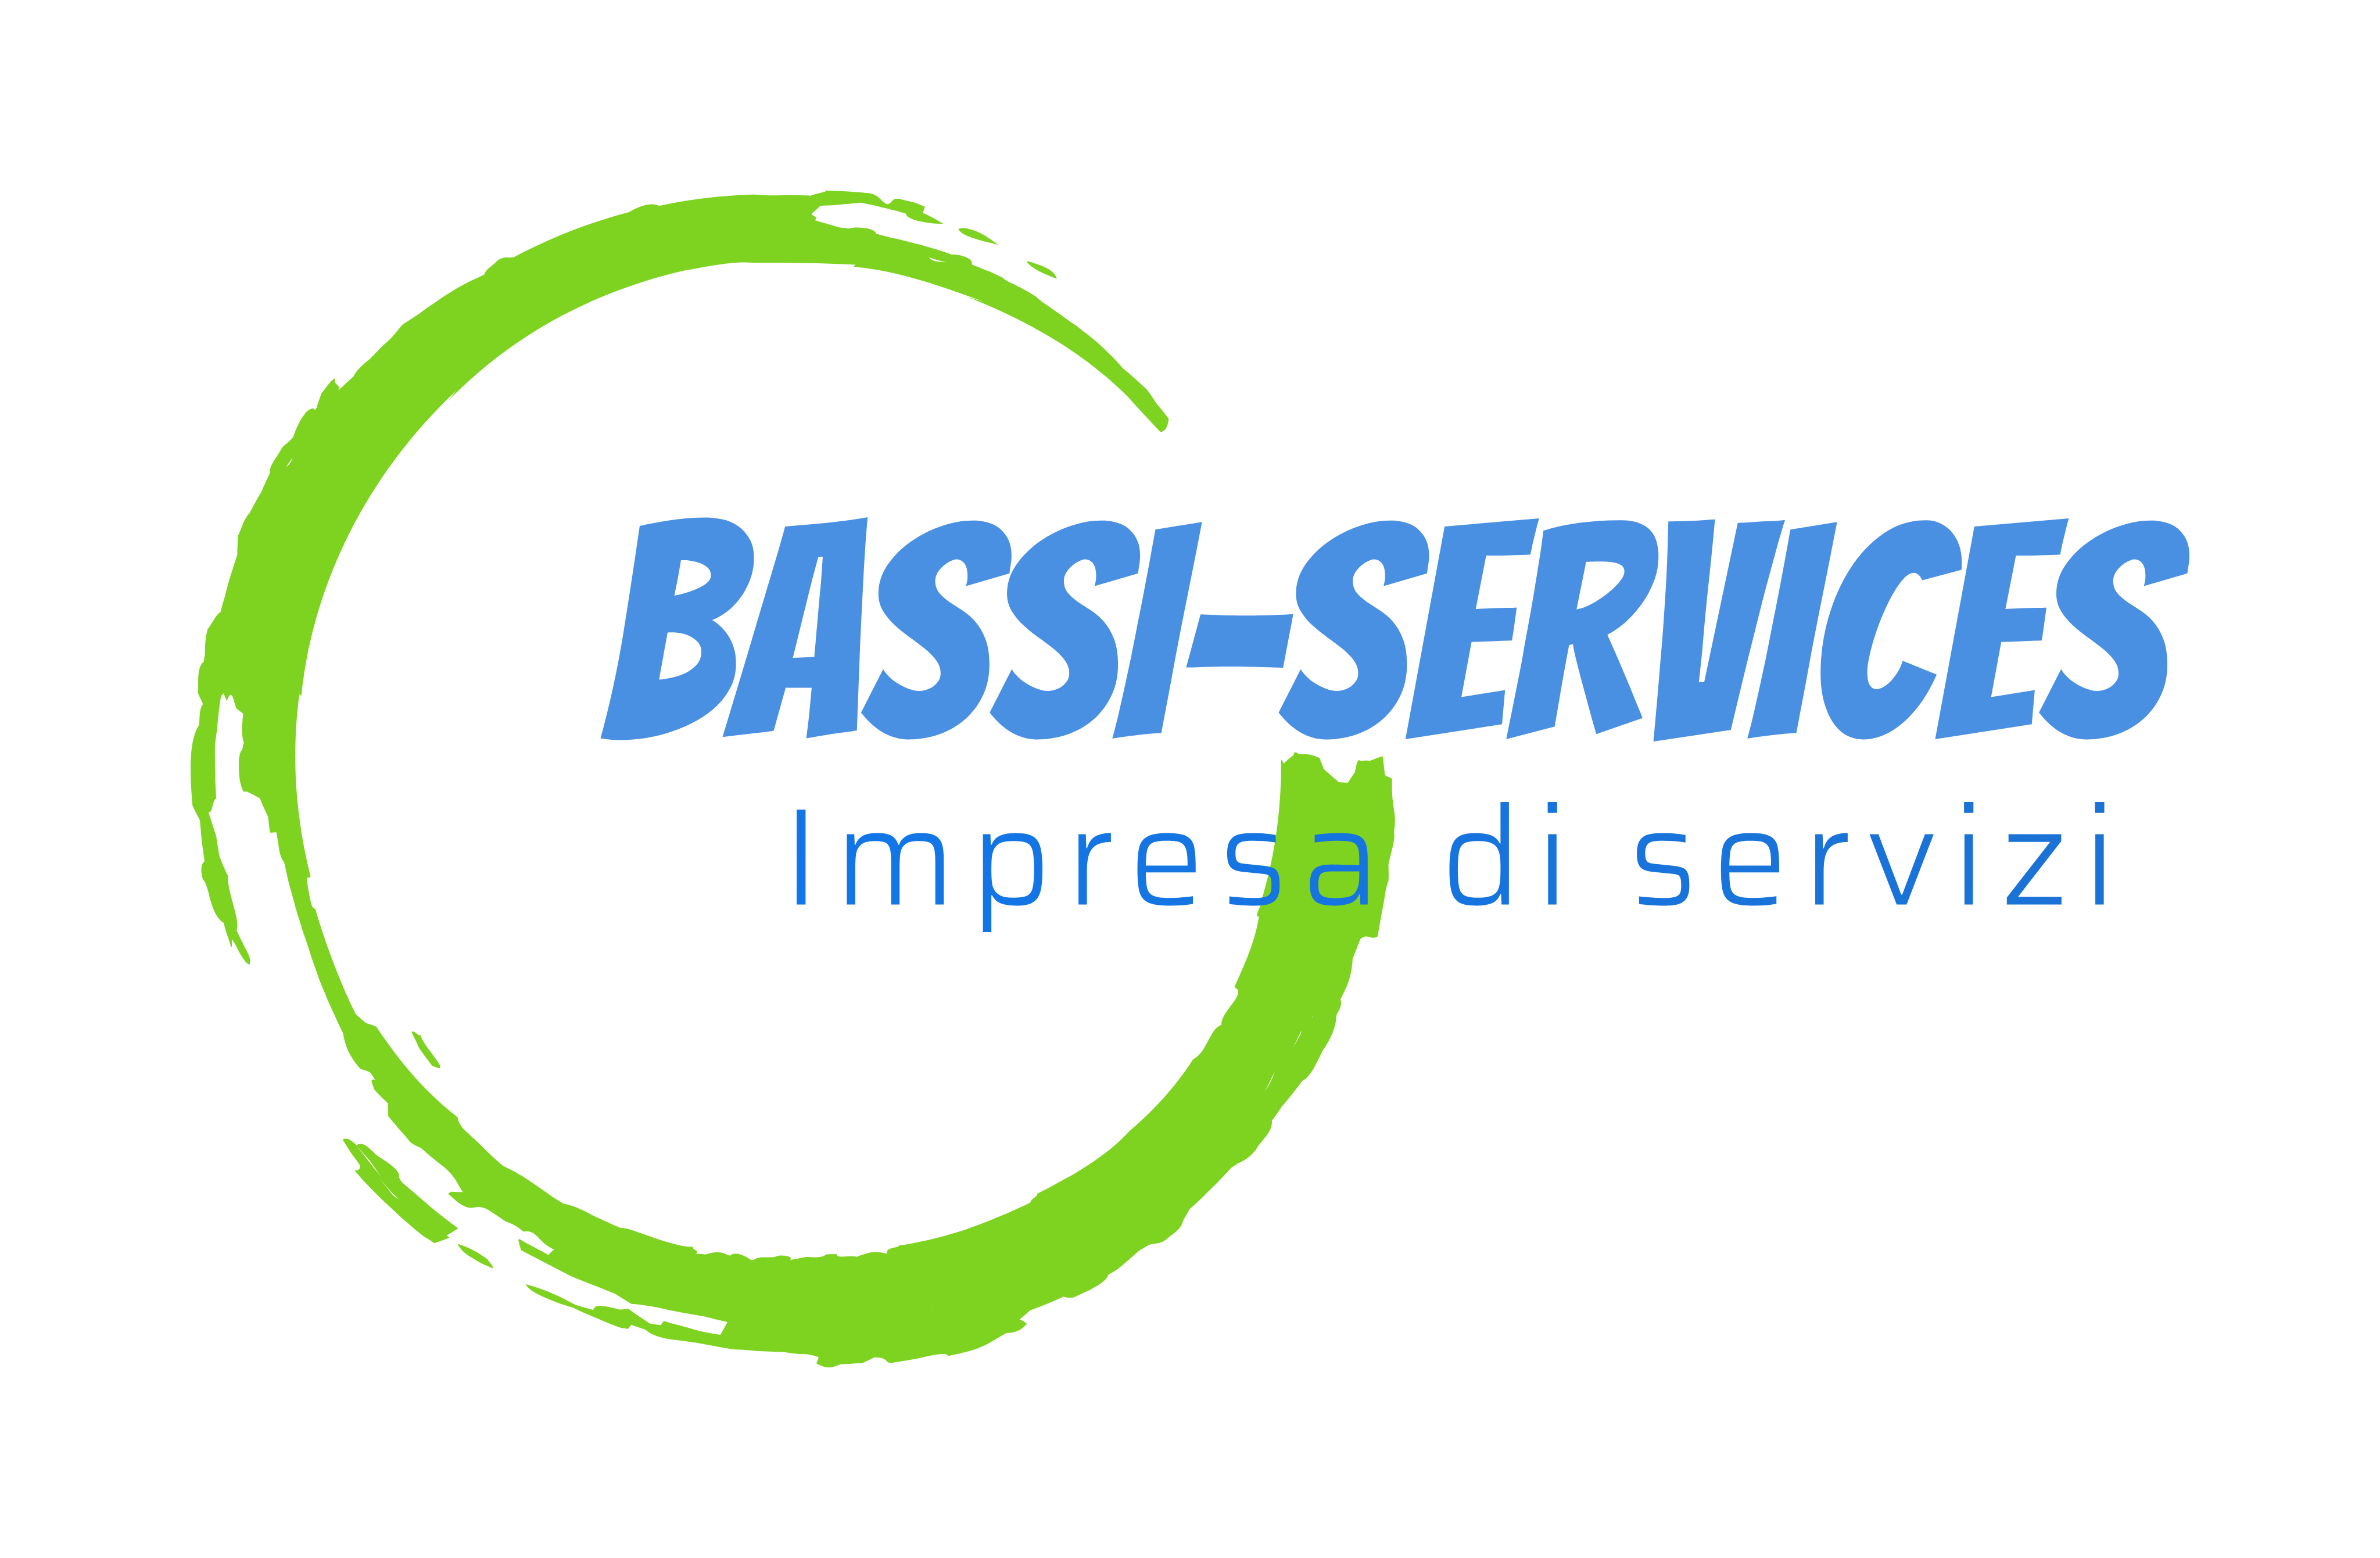 BASSI-SERVICES